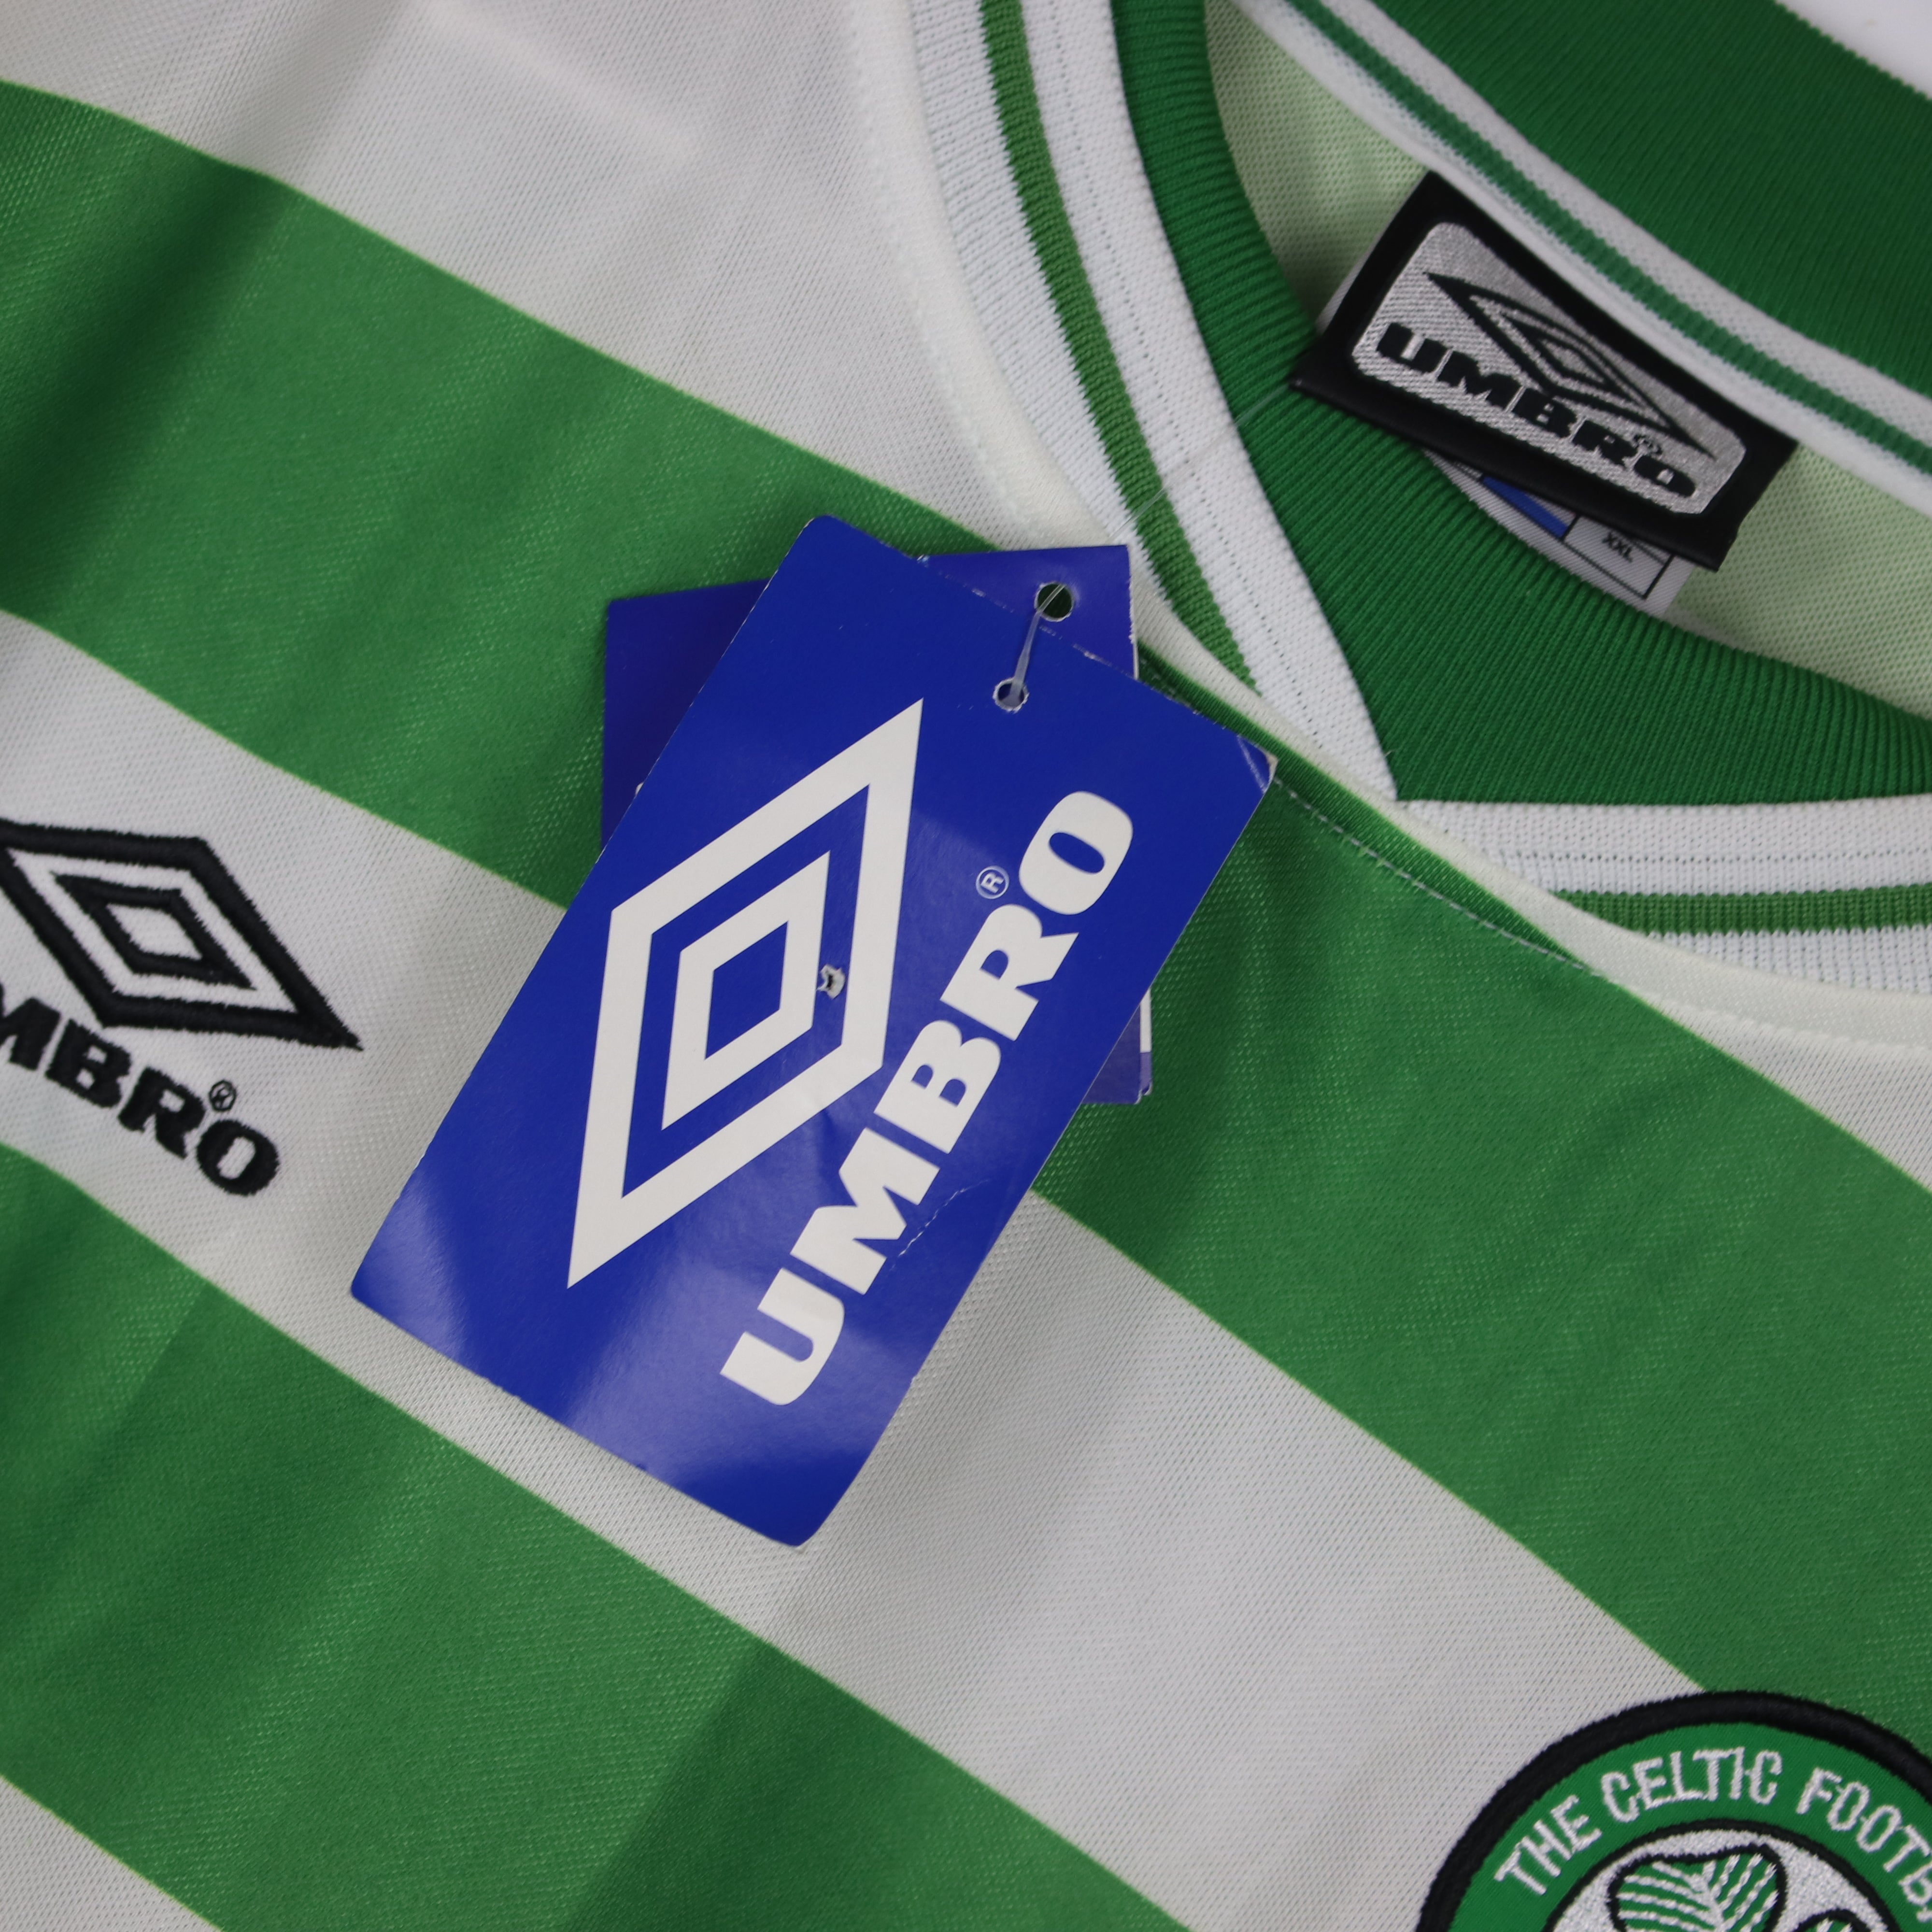 1999-01 Celtic Home Shirt XL